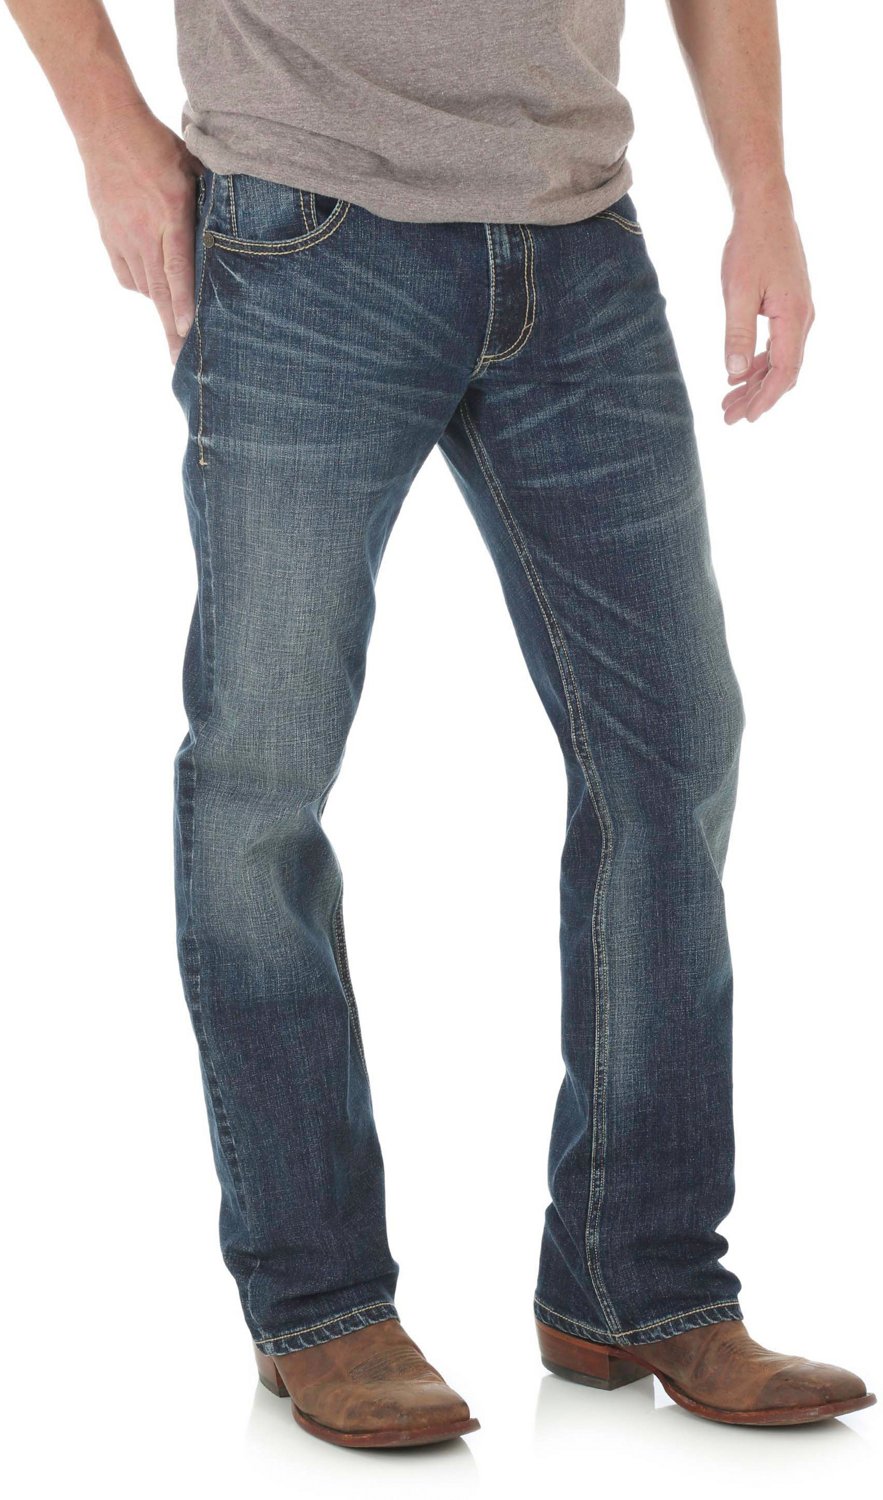 Total 70+ imagen academy wrangler retro jeans